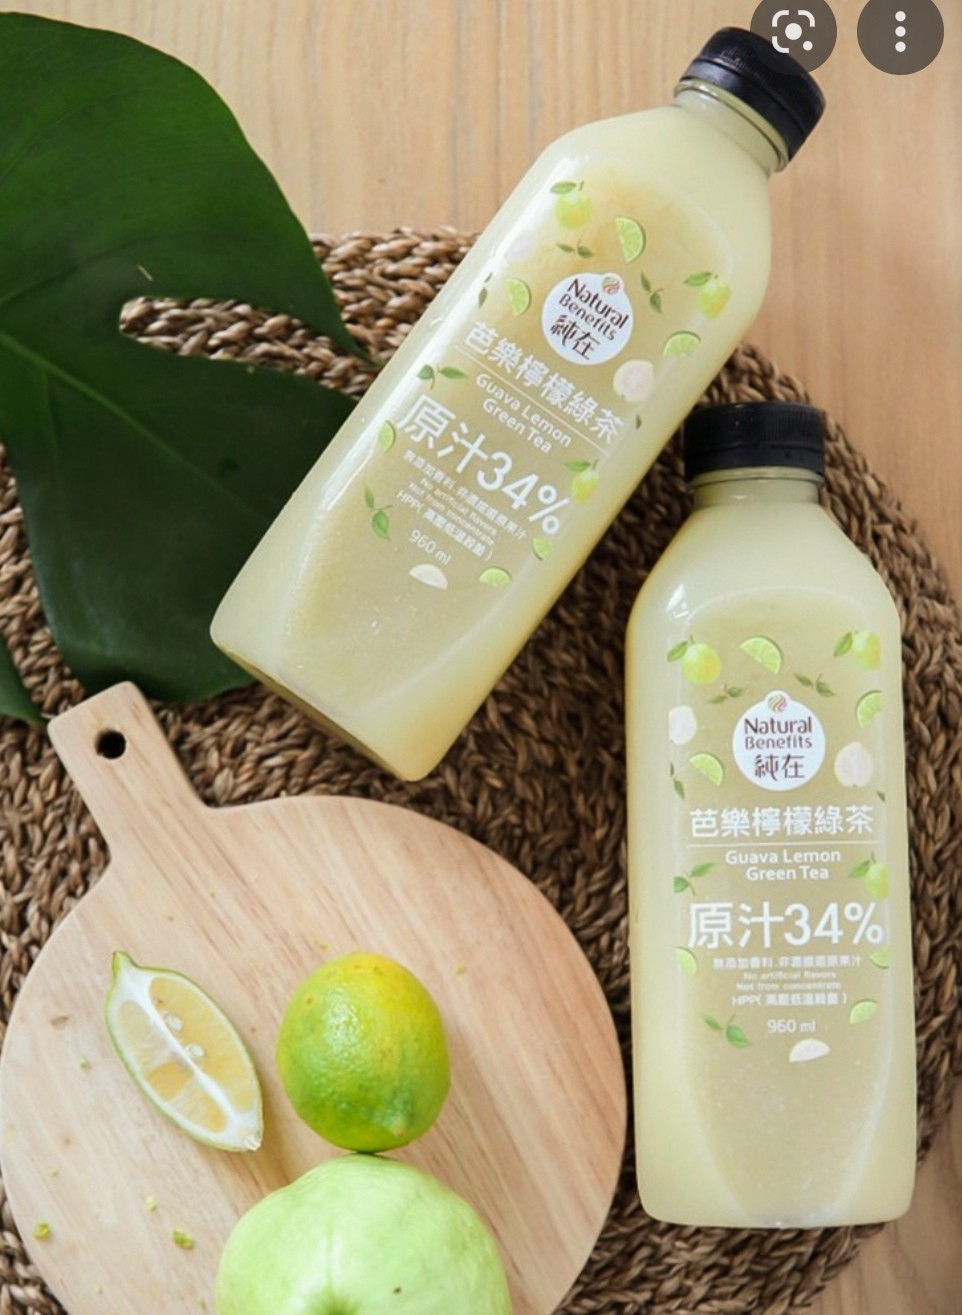 Natural Benefits Guava Lemon Green Tea